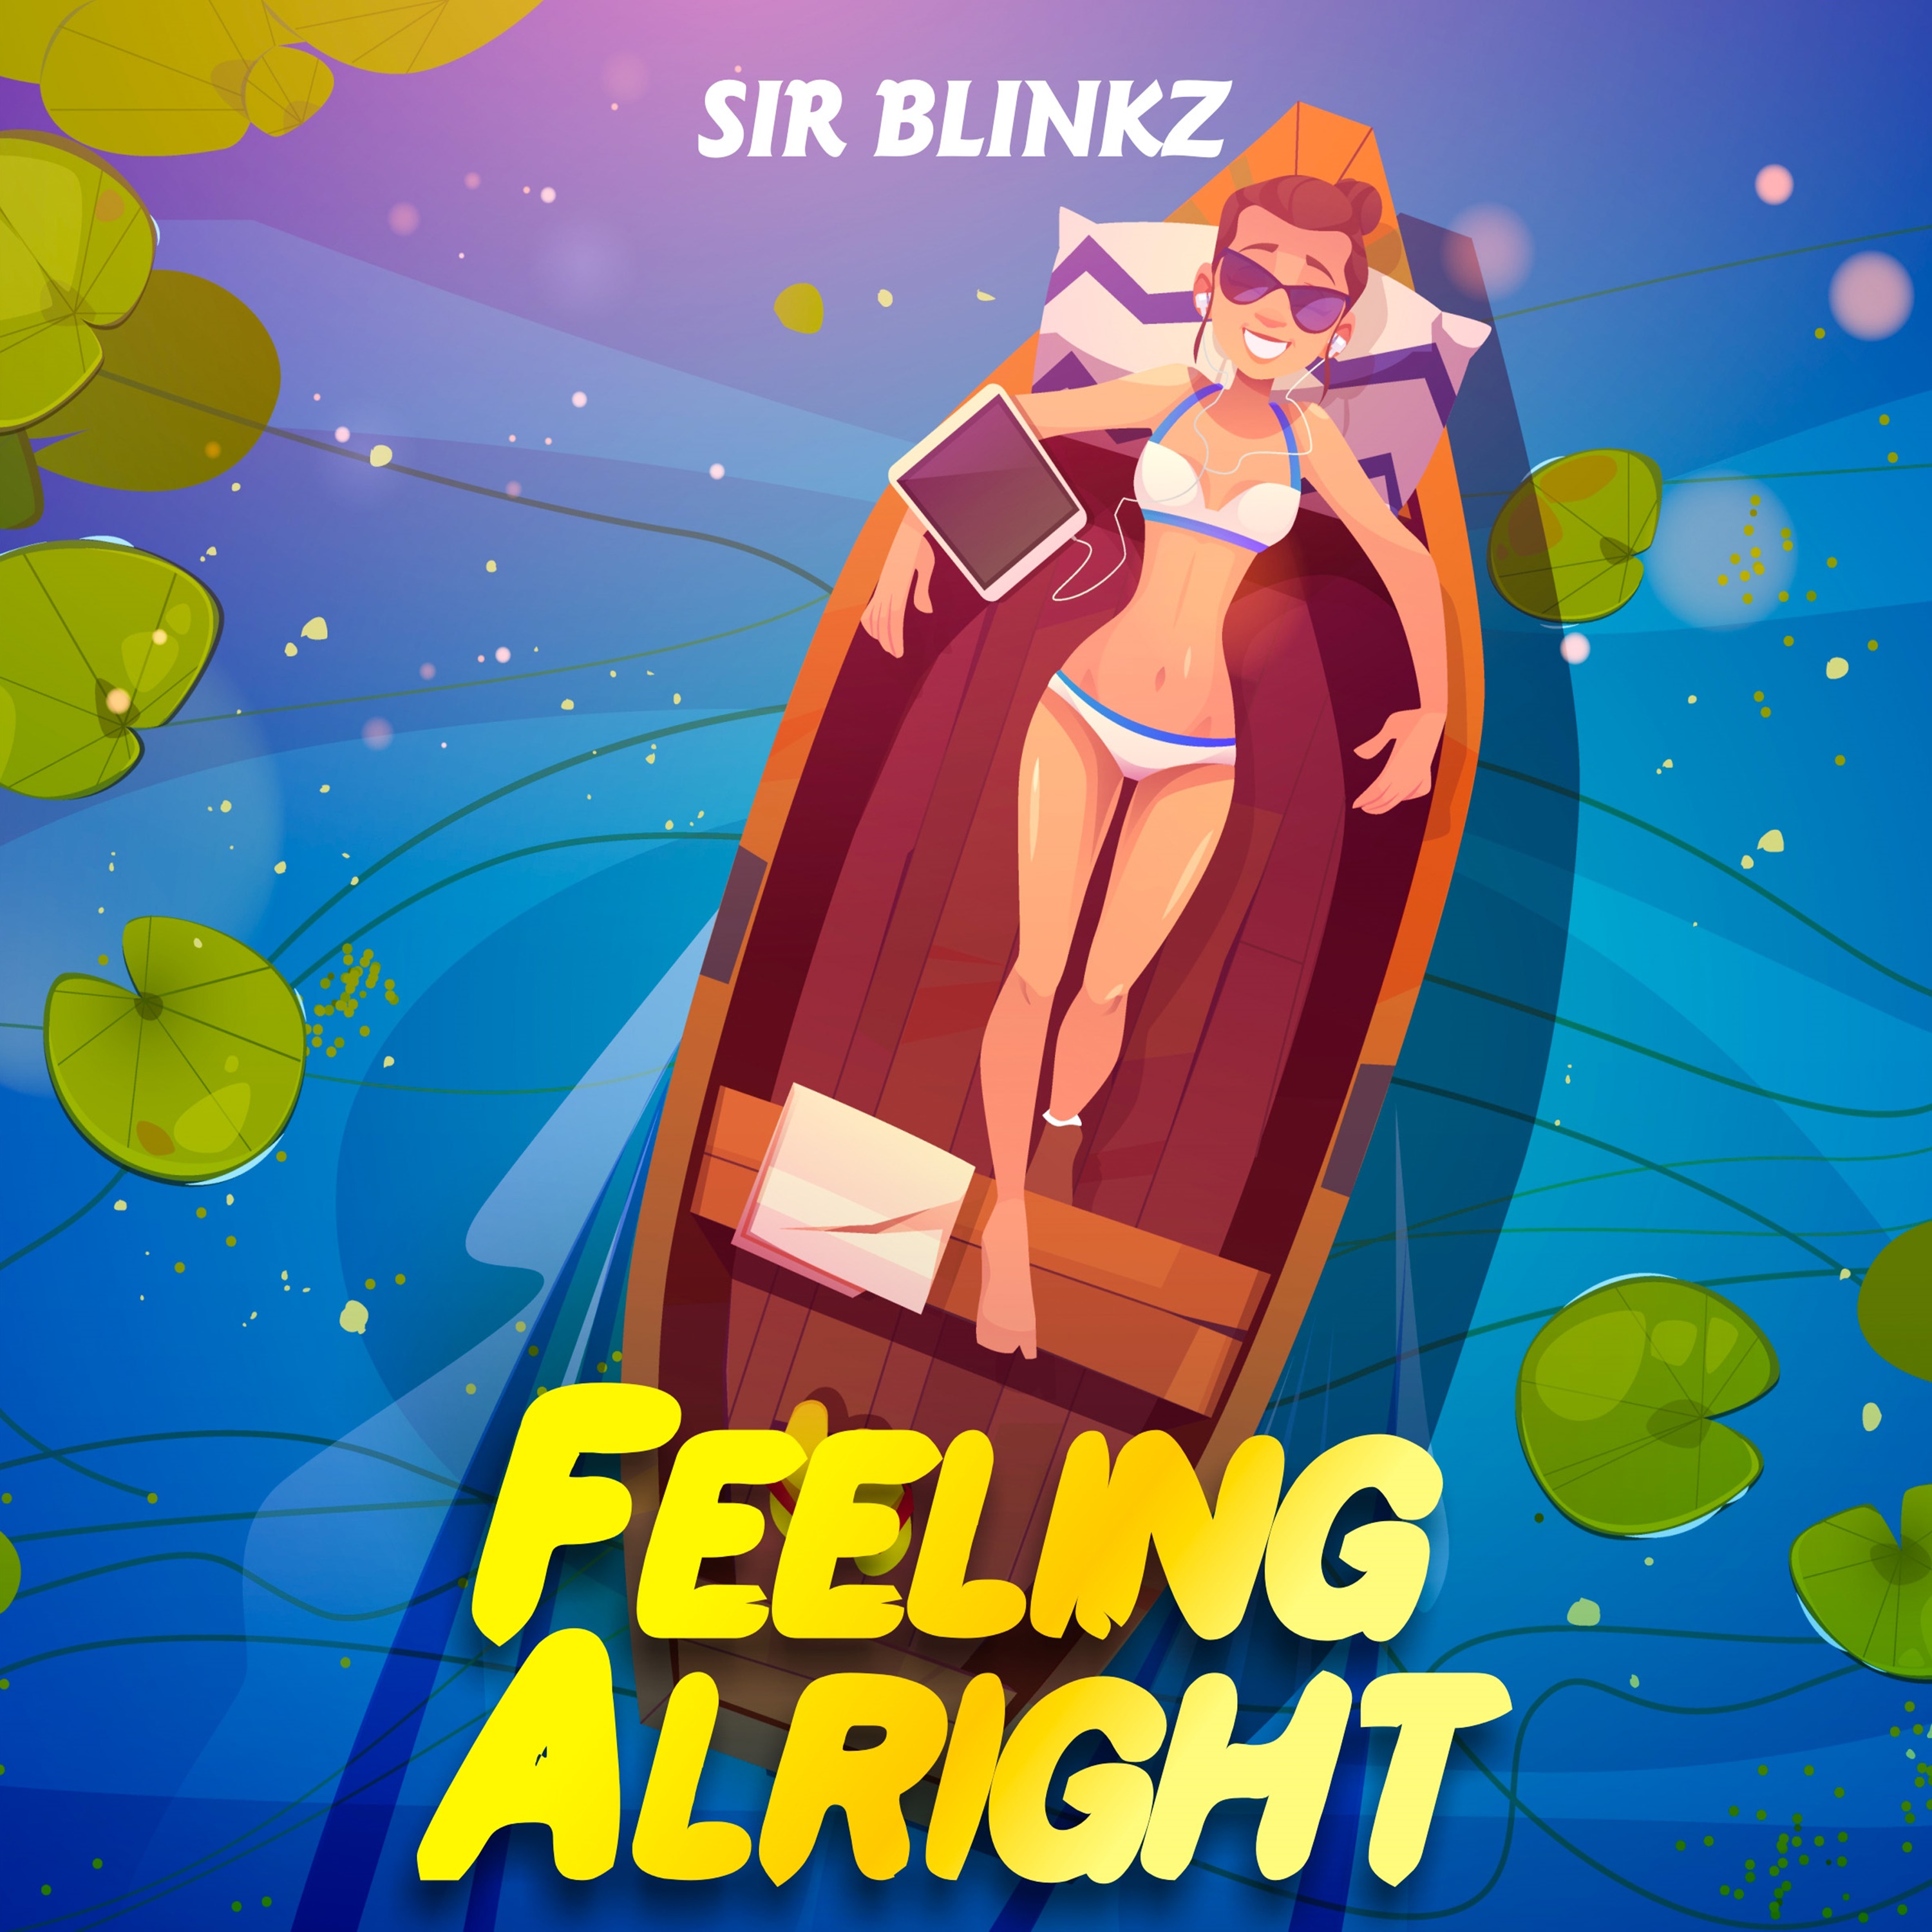 SIR BLINKZ unveils brand new single titled FEELING ALRIGHT